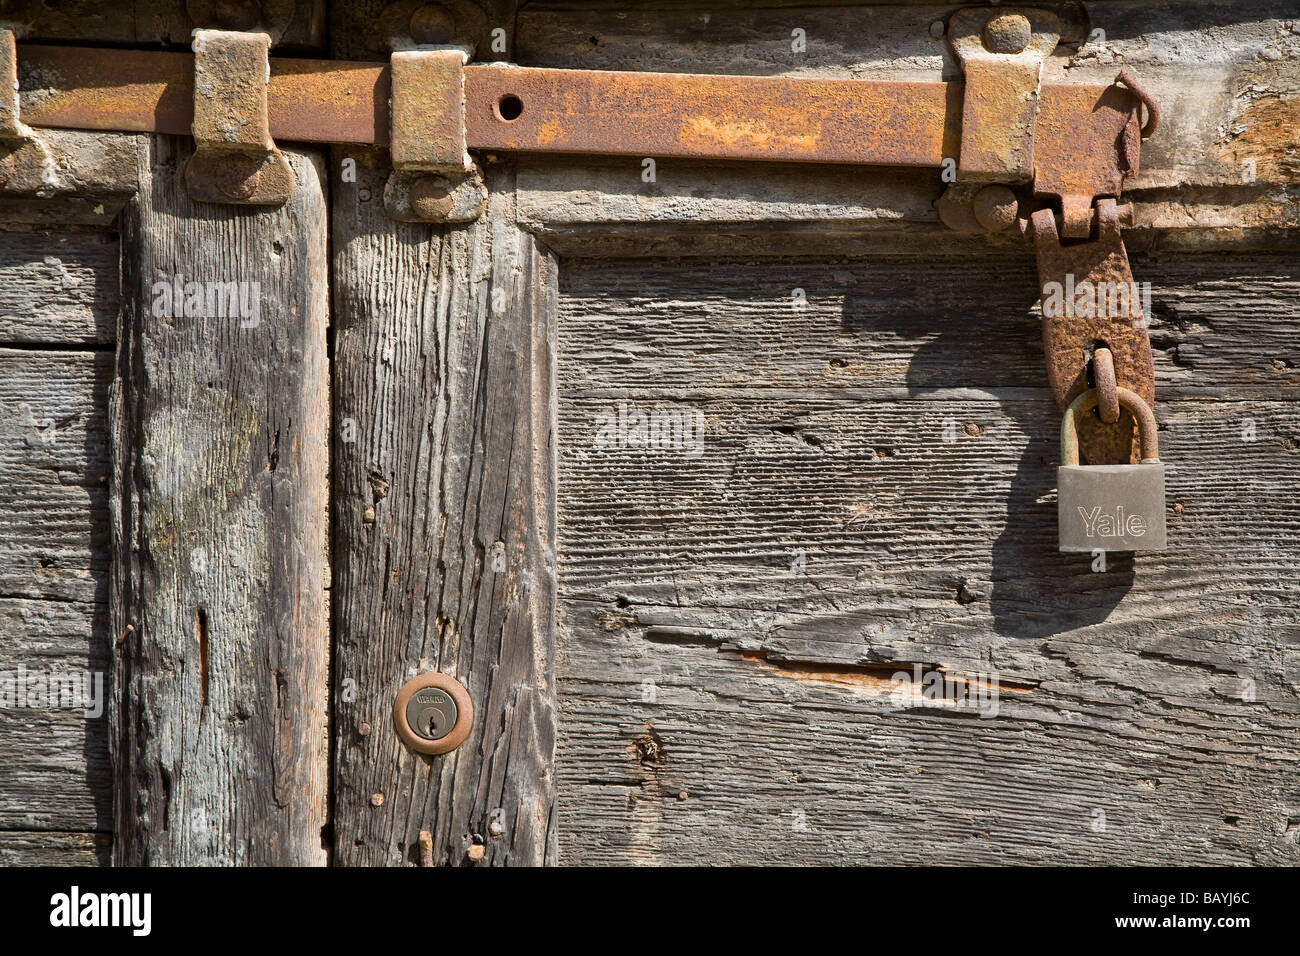 knarled wooden door detail rusty bolts locks Yale Stock Photo